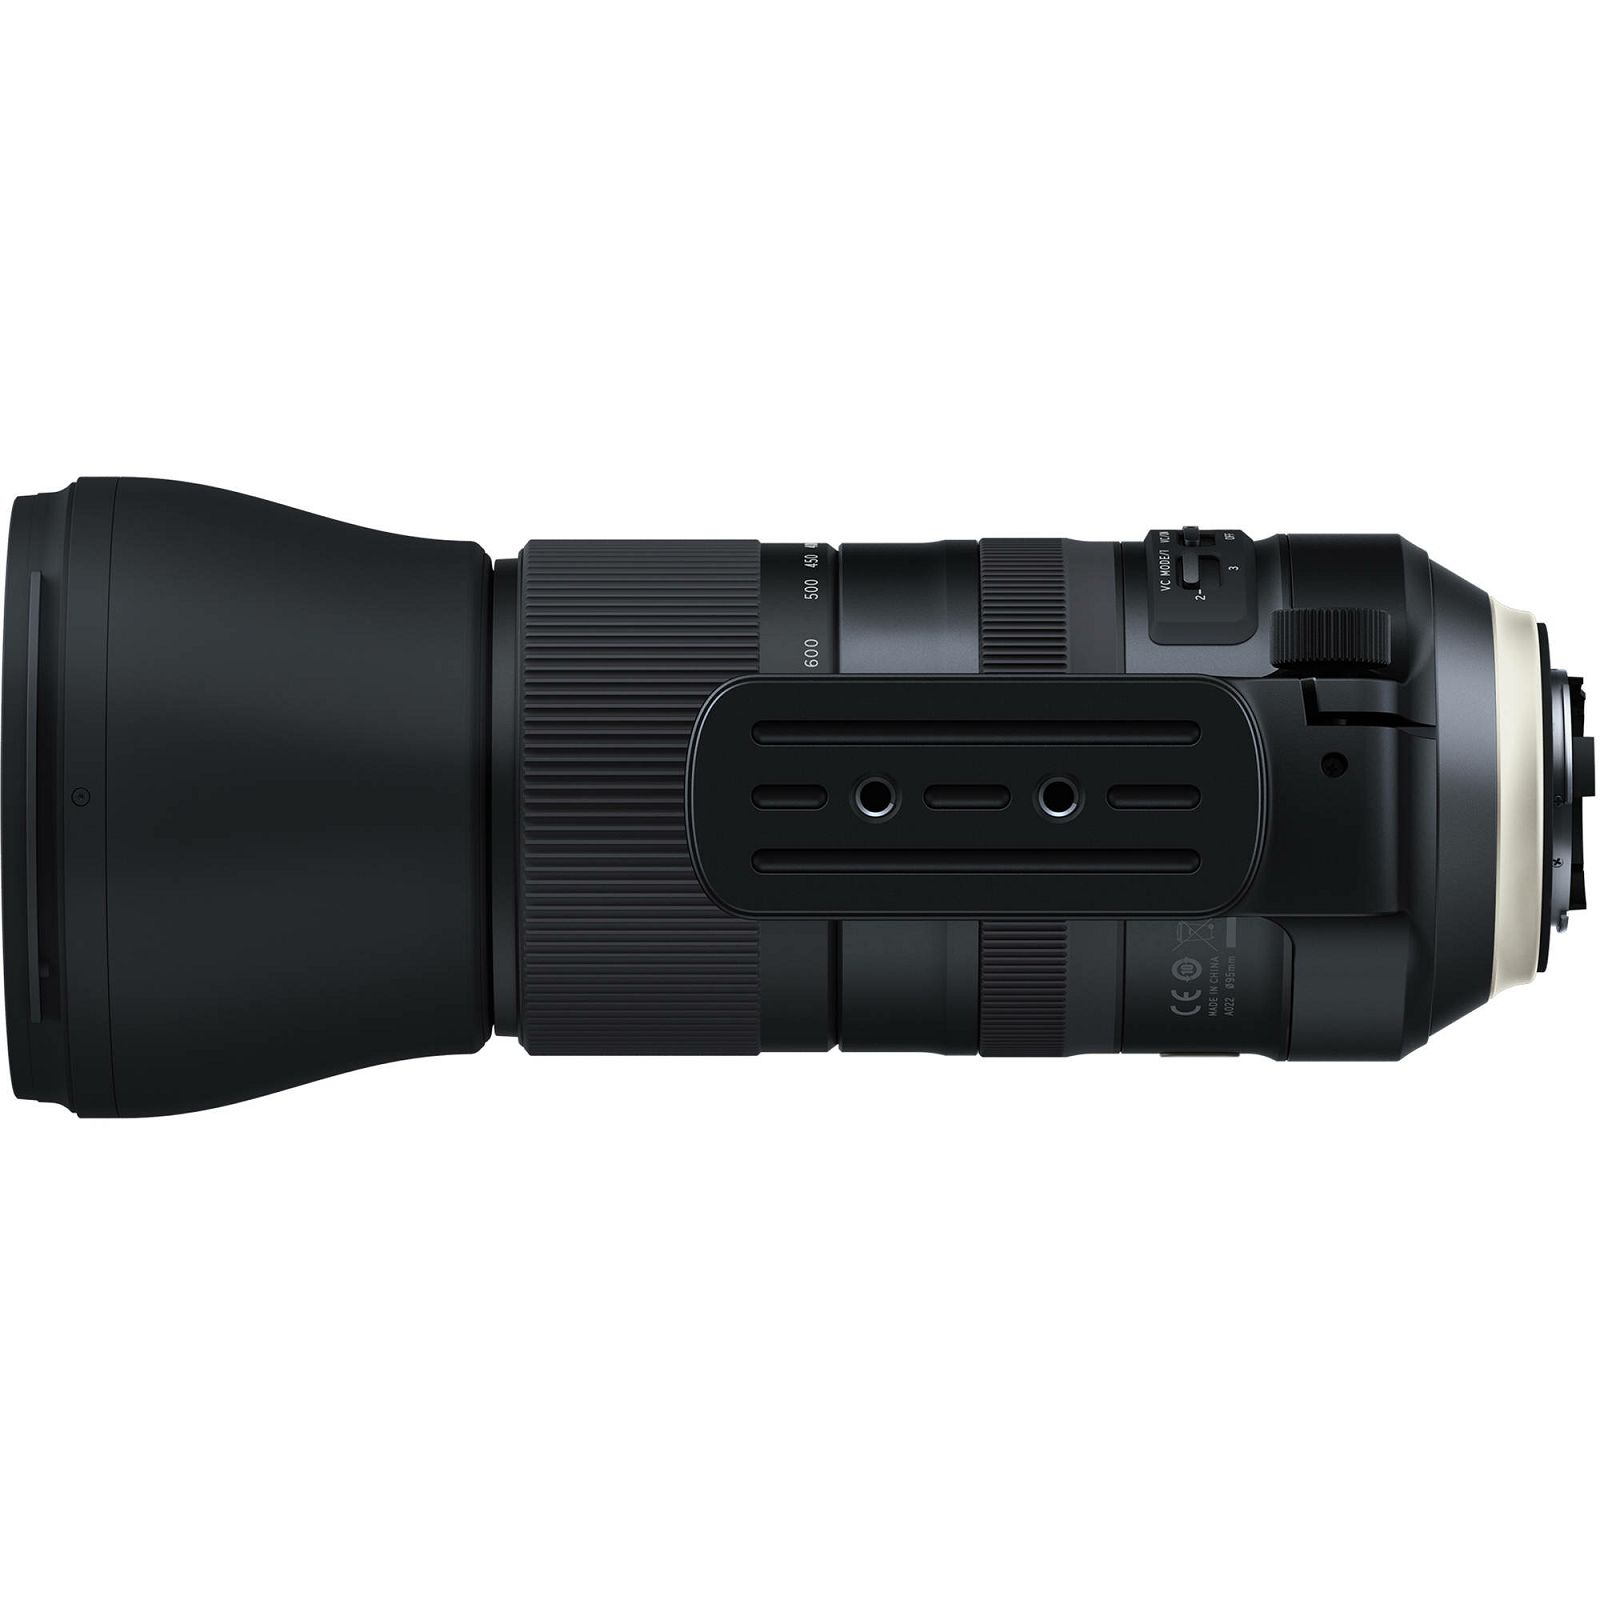 Tamron SP AF 150-600mm f/5-6.3 Di USD G2 telefoto objektiv za Sony A-mount (A022S)